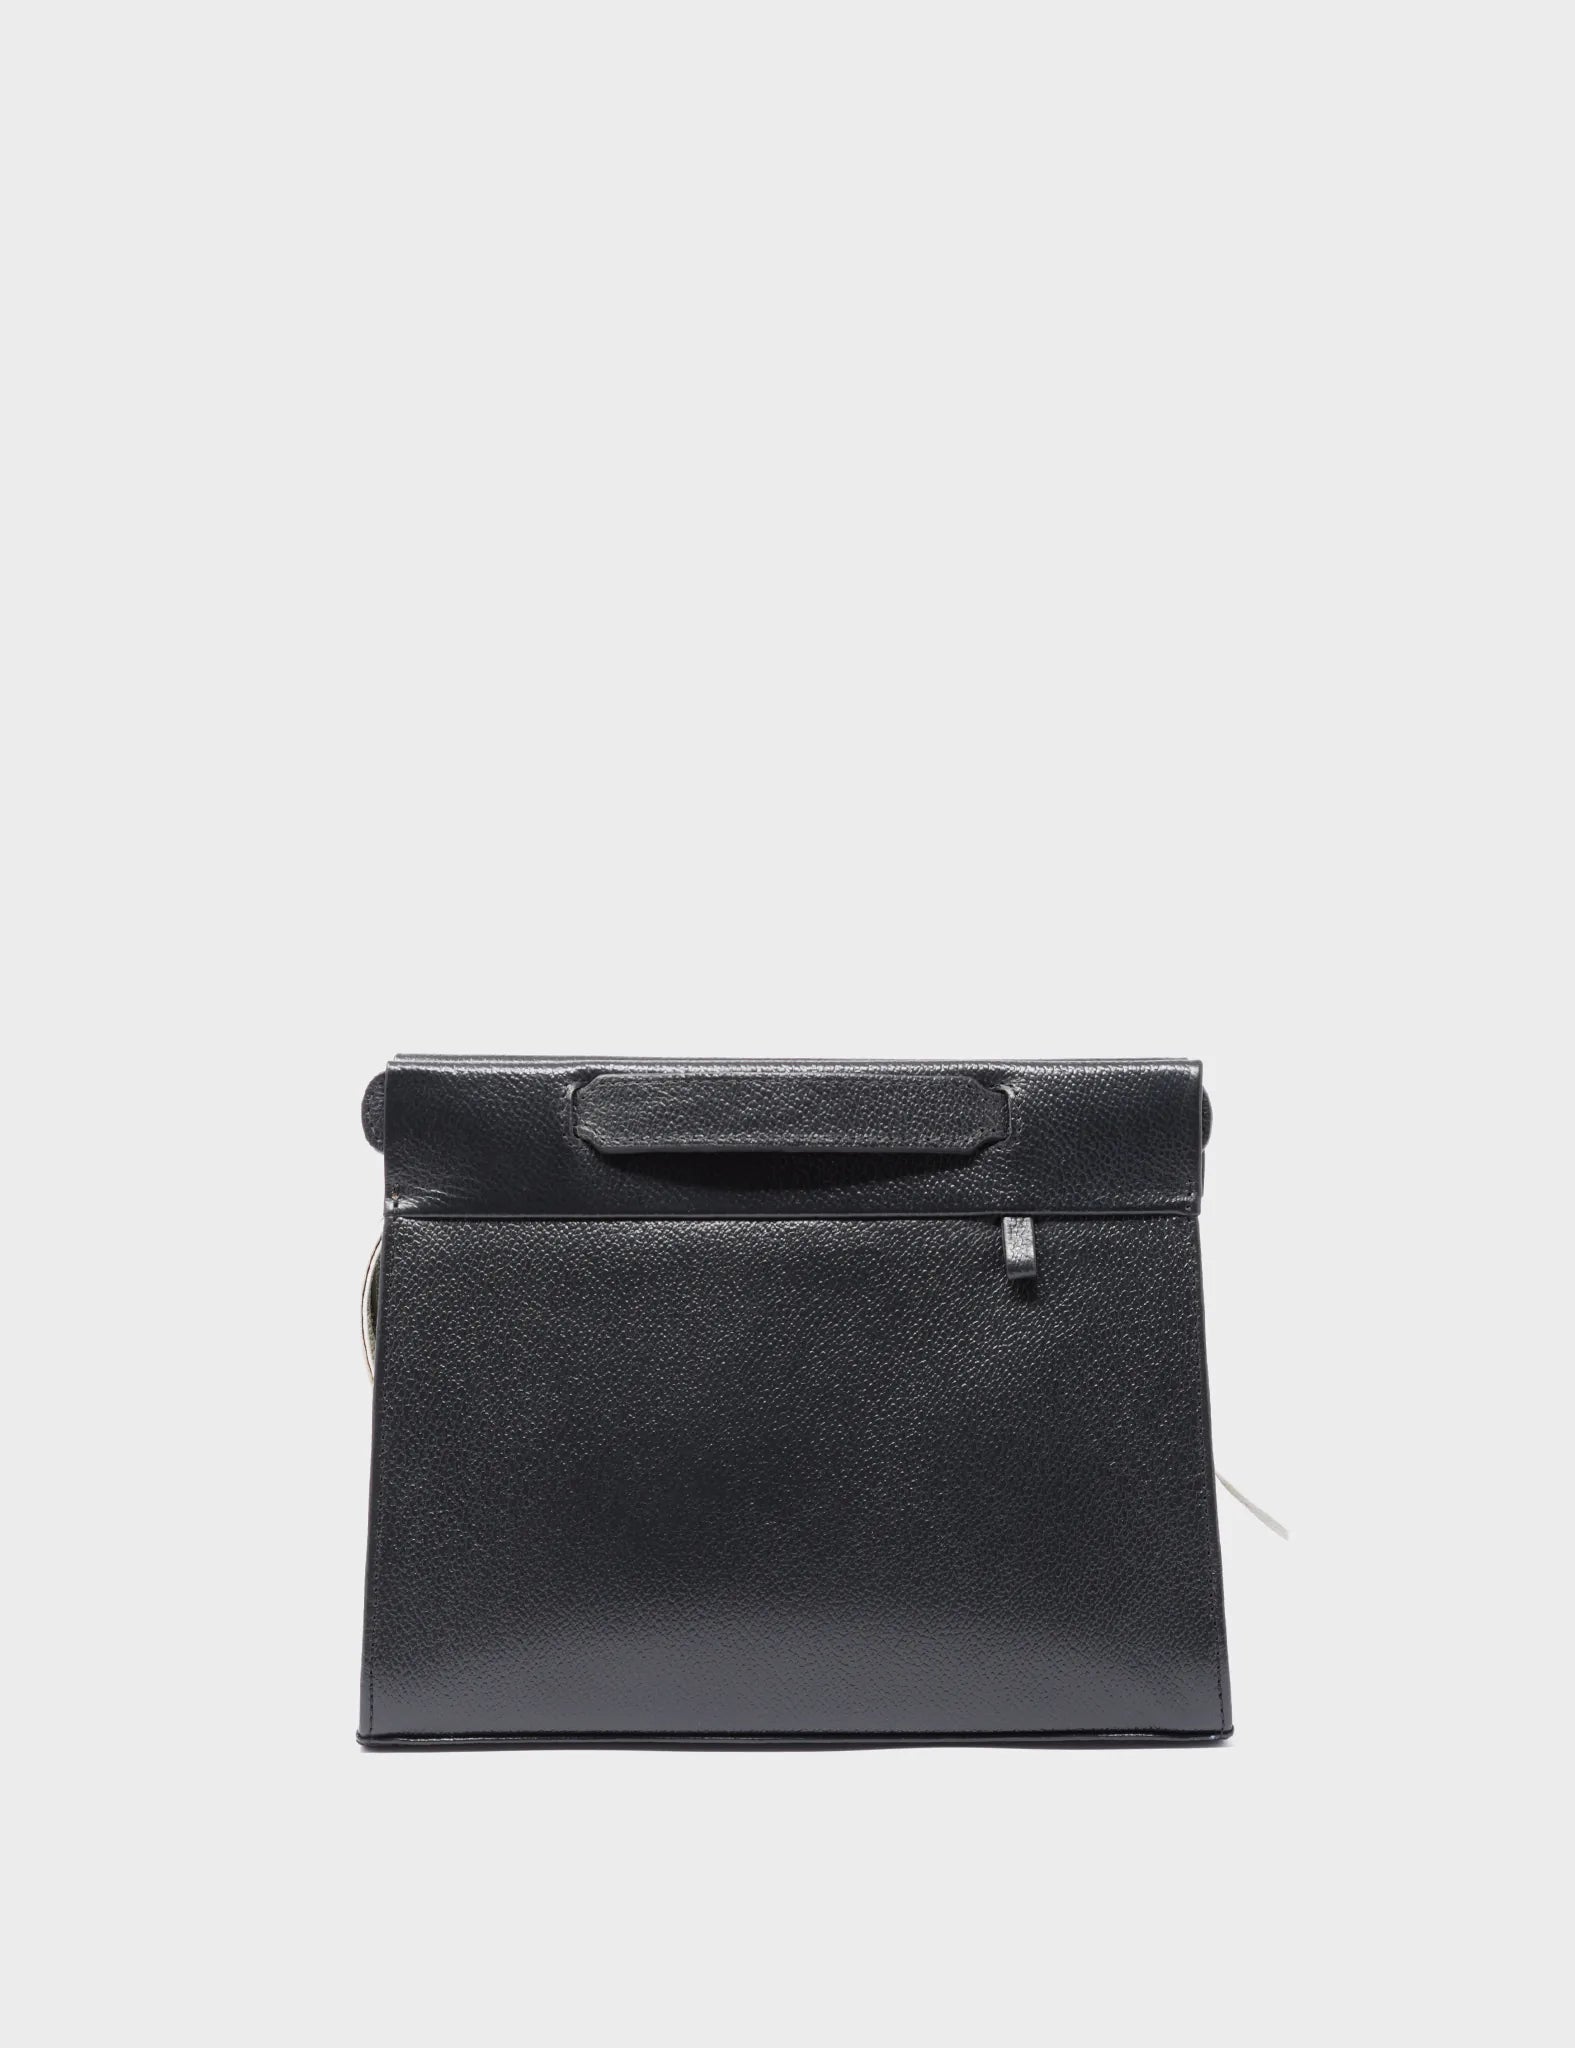 Vali Crossbody Small Black Leather Bag - El Tropico Print Design - Front